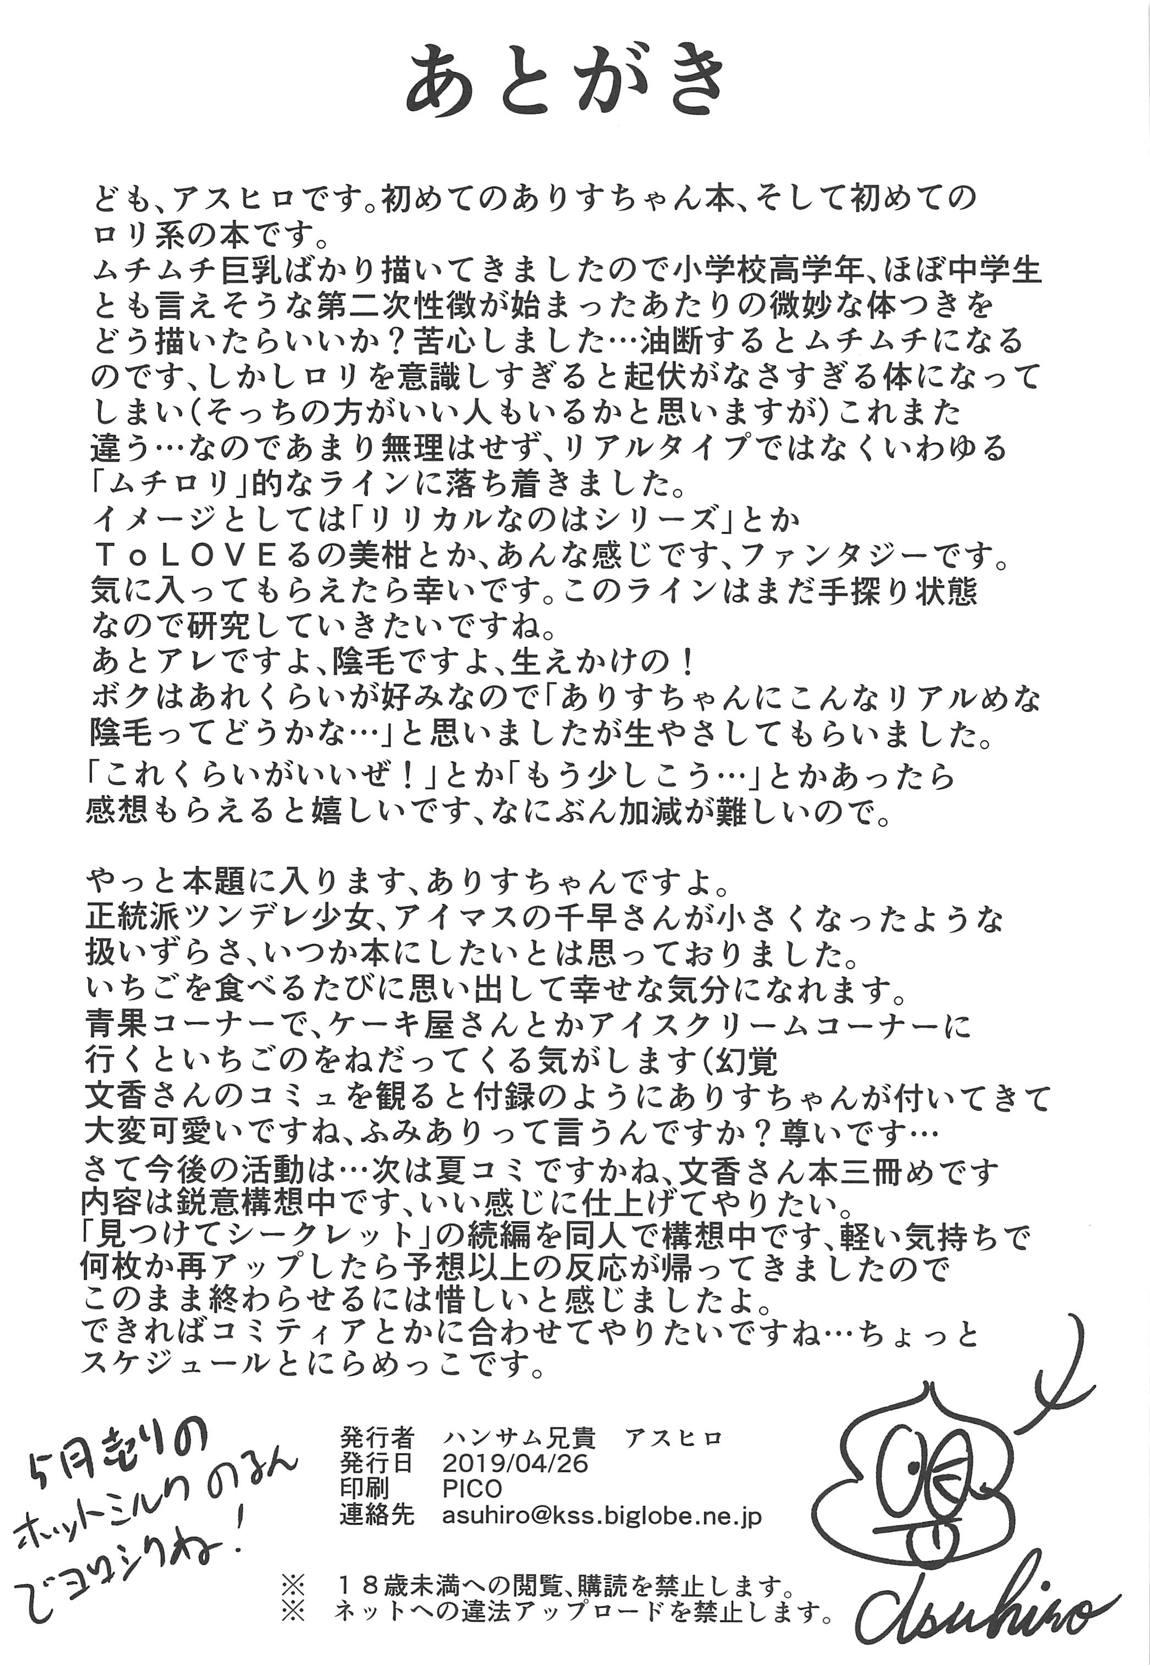 Bisex Tenshi no Akubi - The idolmaster 19yo - Page 25